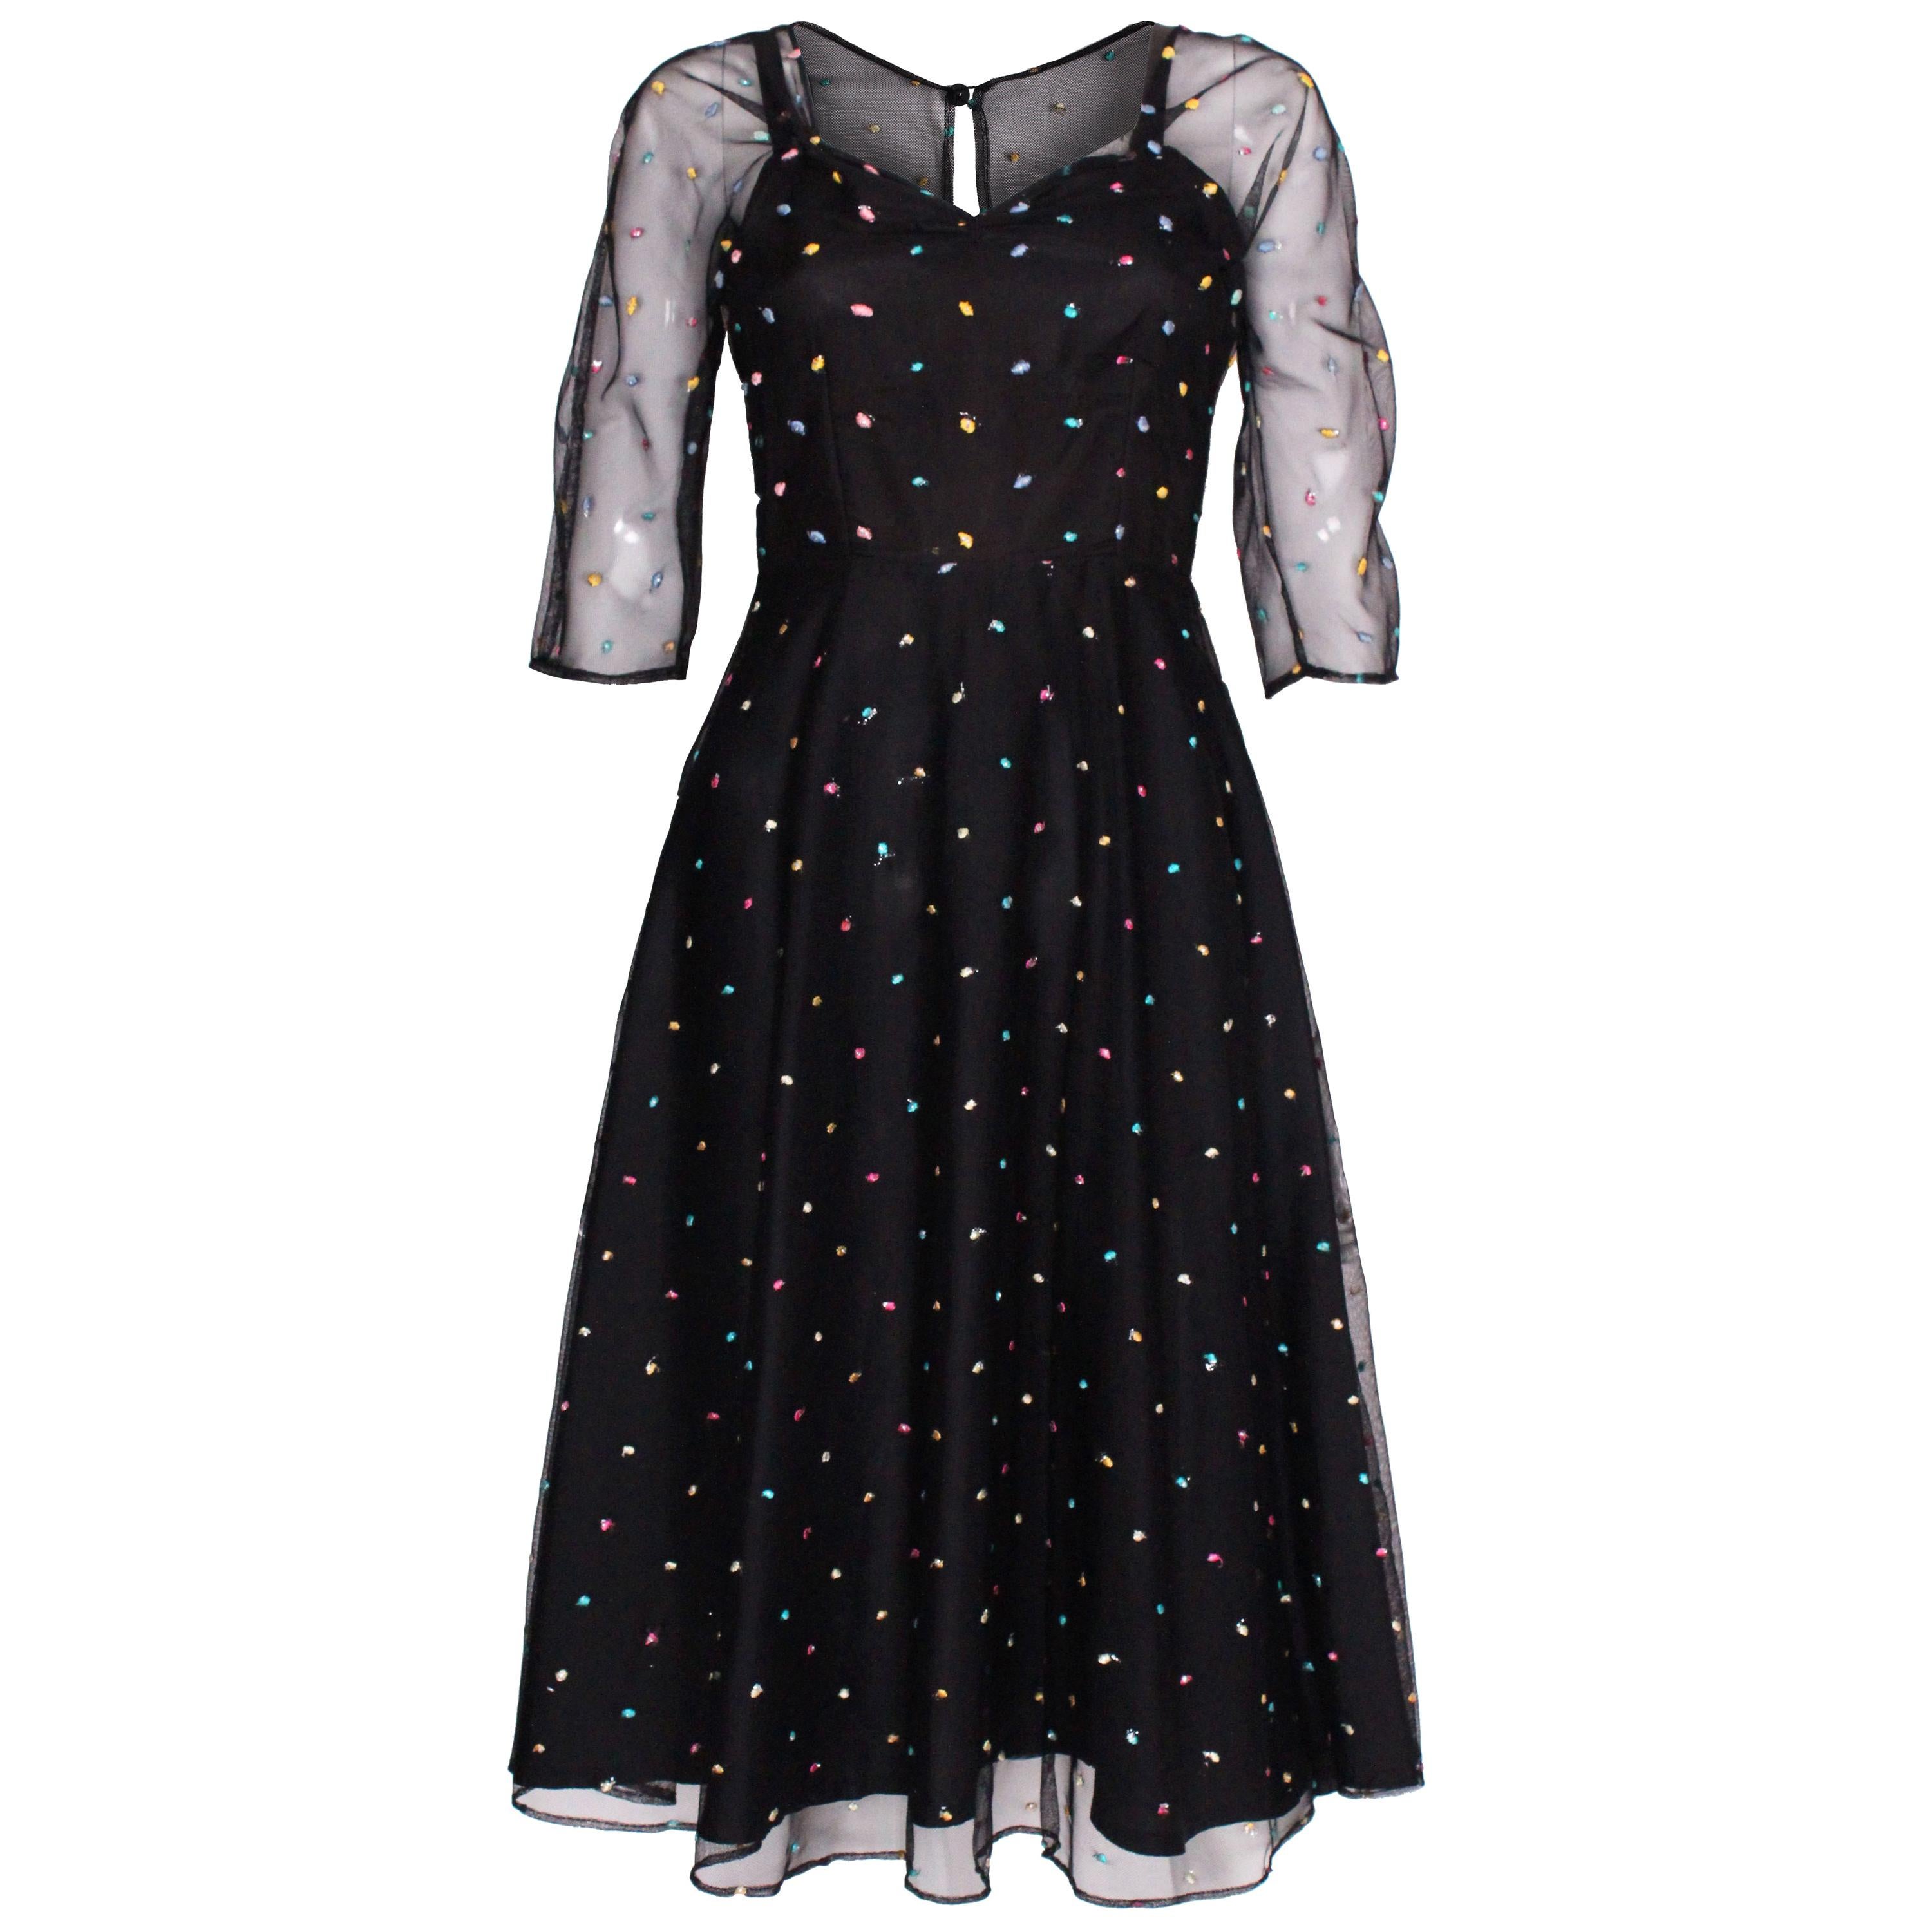 a vintage 1970s polka dot Party Dress by Radley